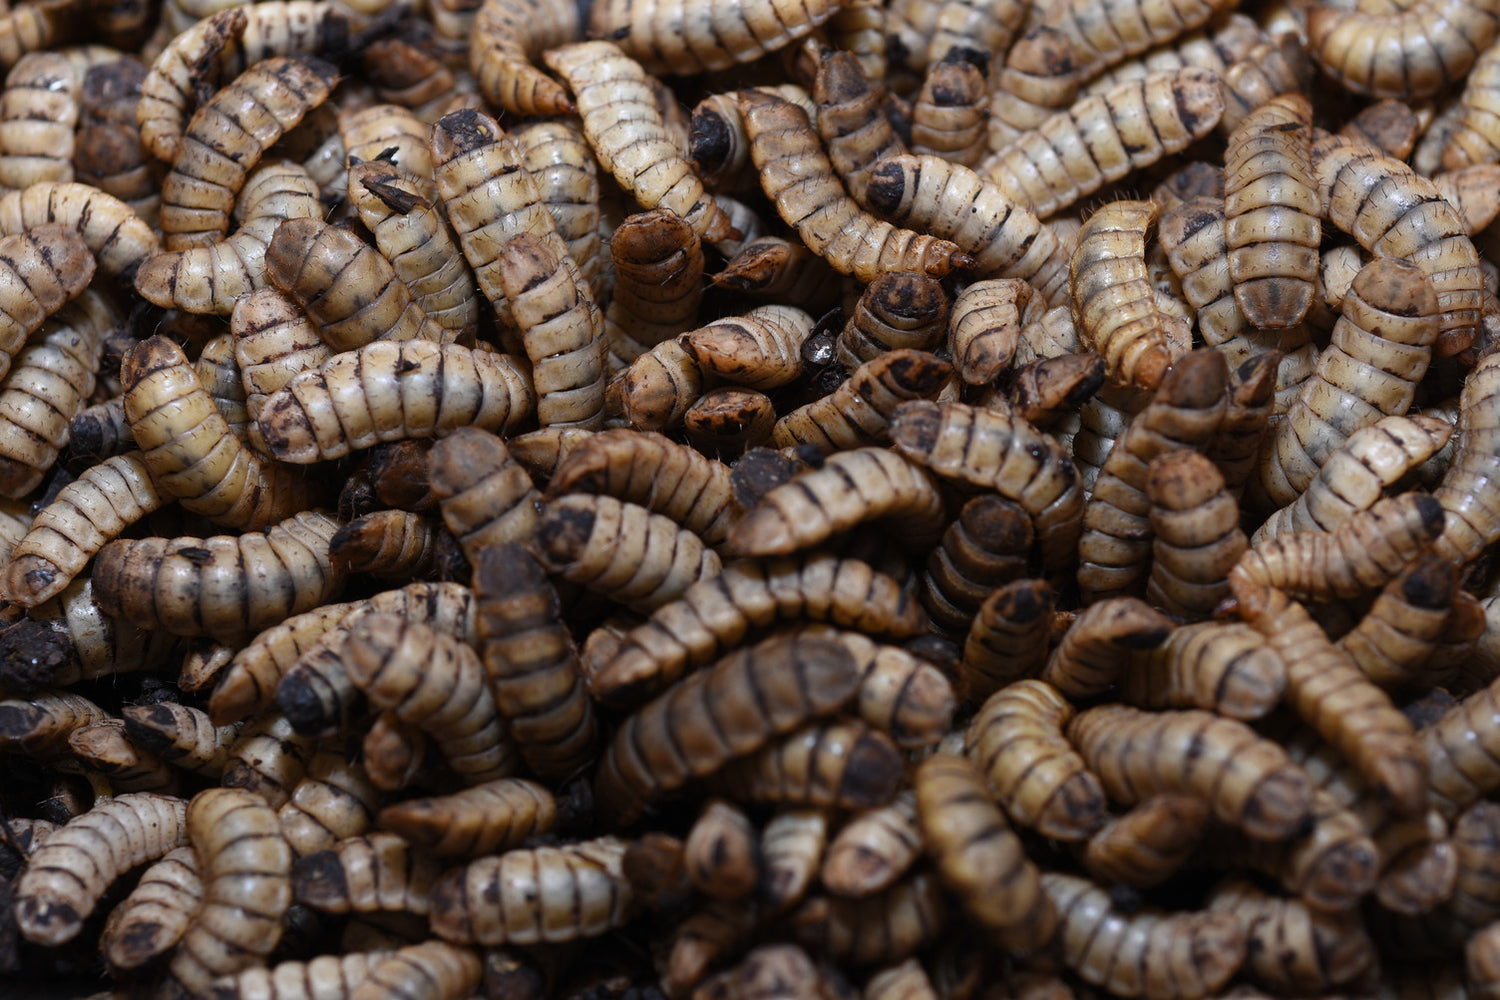 larvas de mosca soldado negra vivas, alimento para mascotas, suplemento para animales